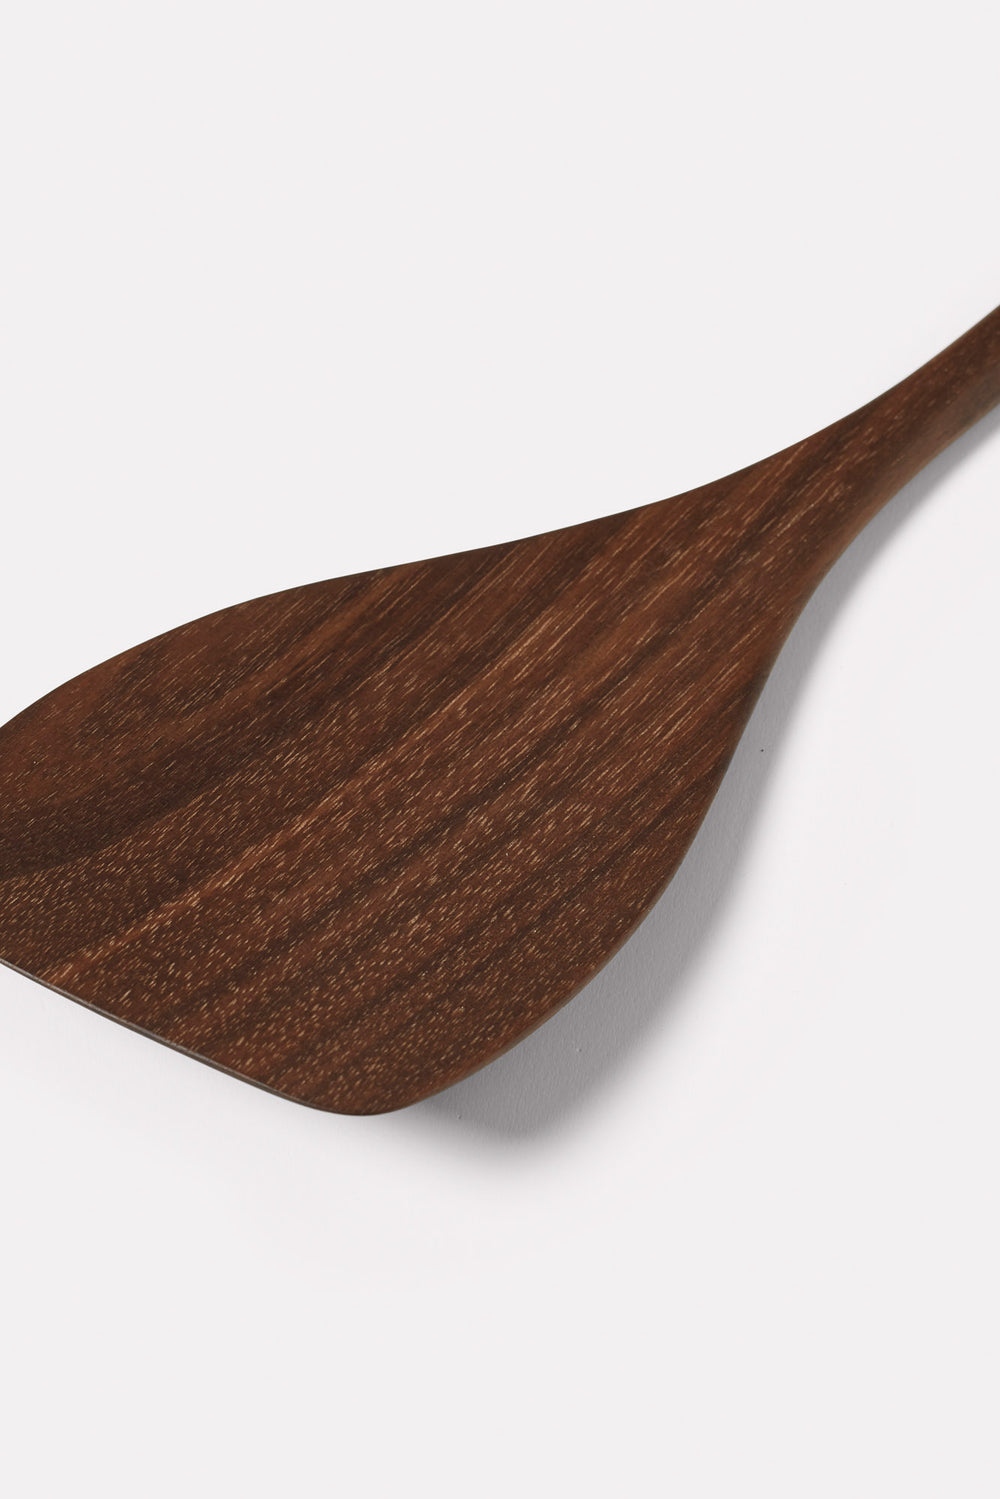 Itza Hard Angled Wood Spatula – Minzuu